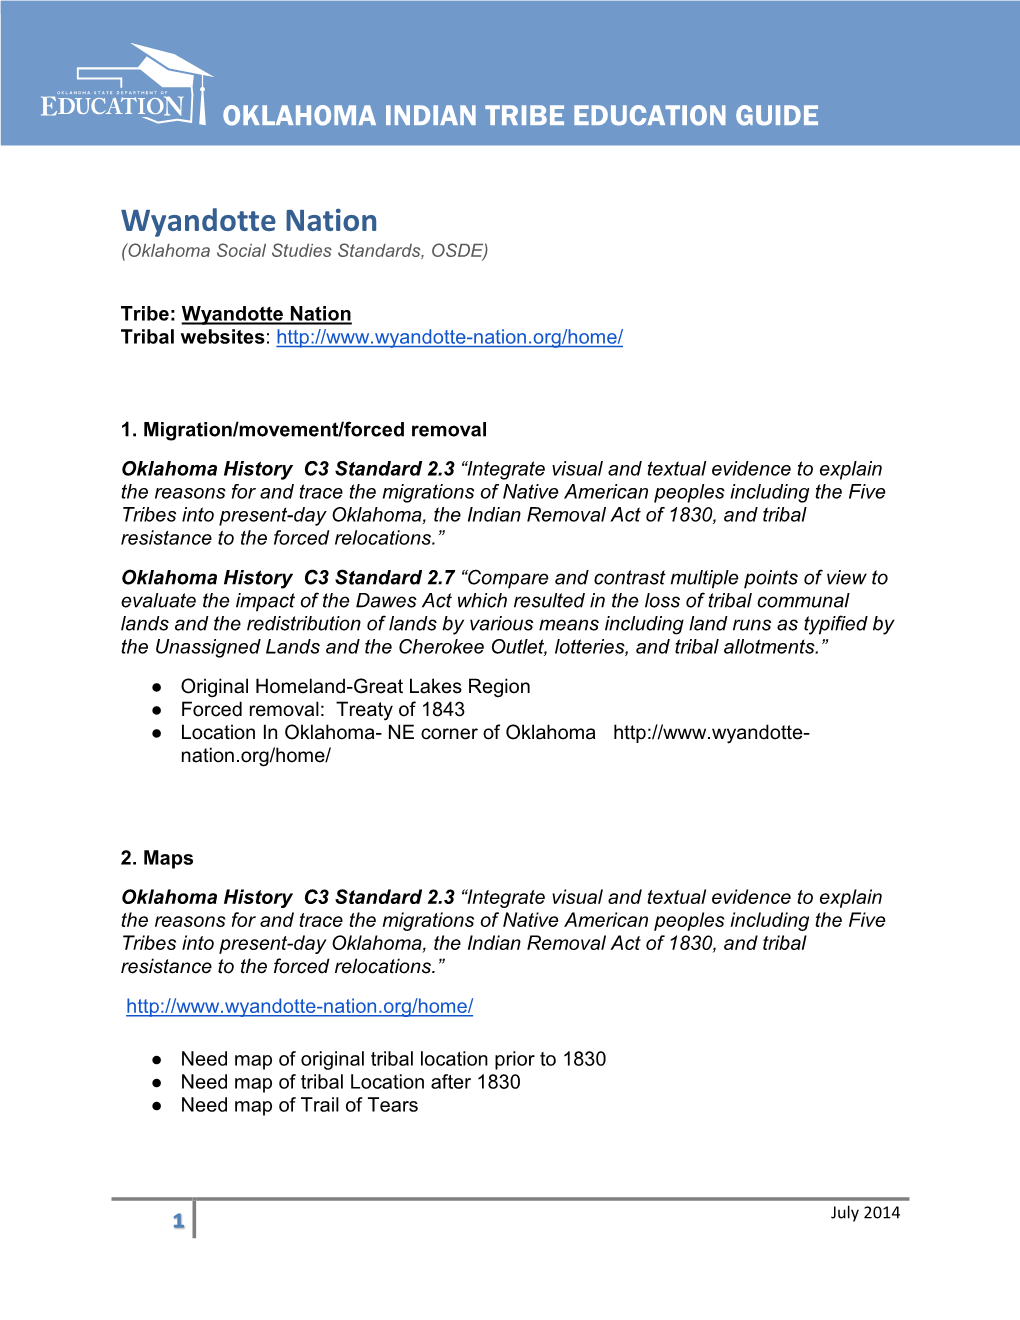 Wyandotte Nation (Oklahoma Social Studies Standards, OSDE)